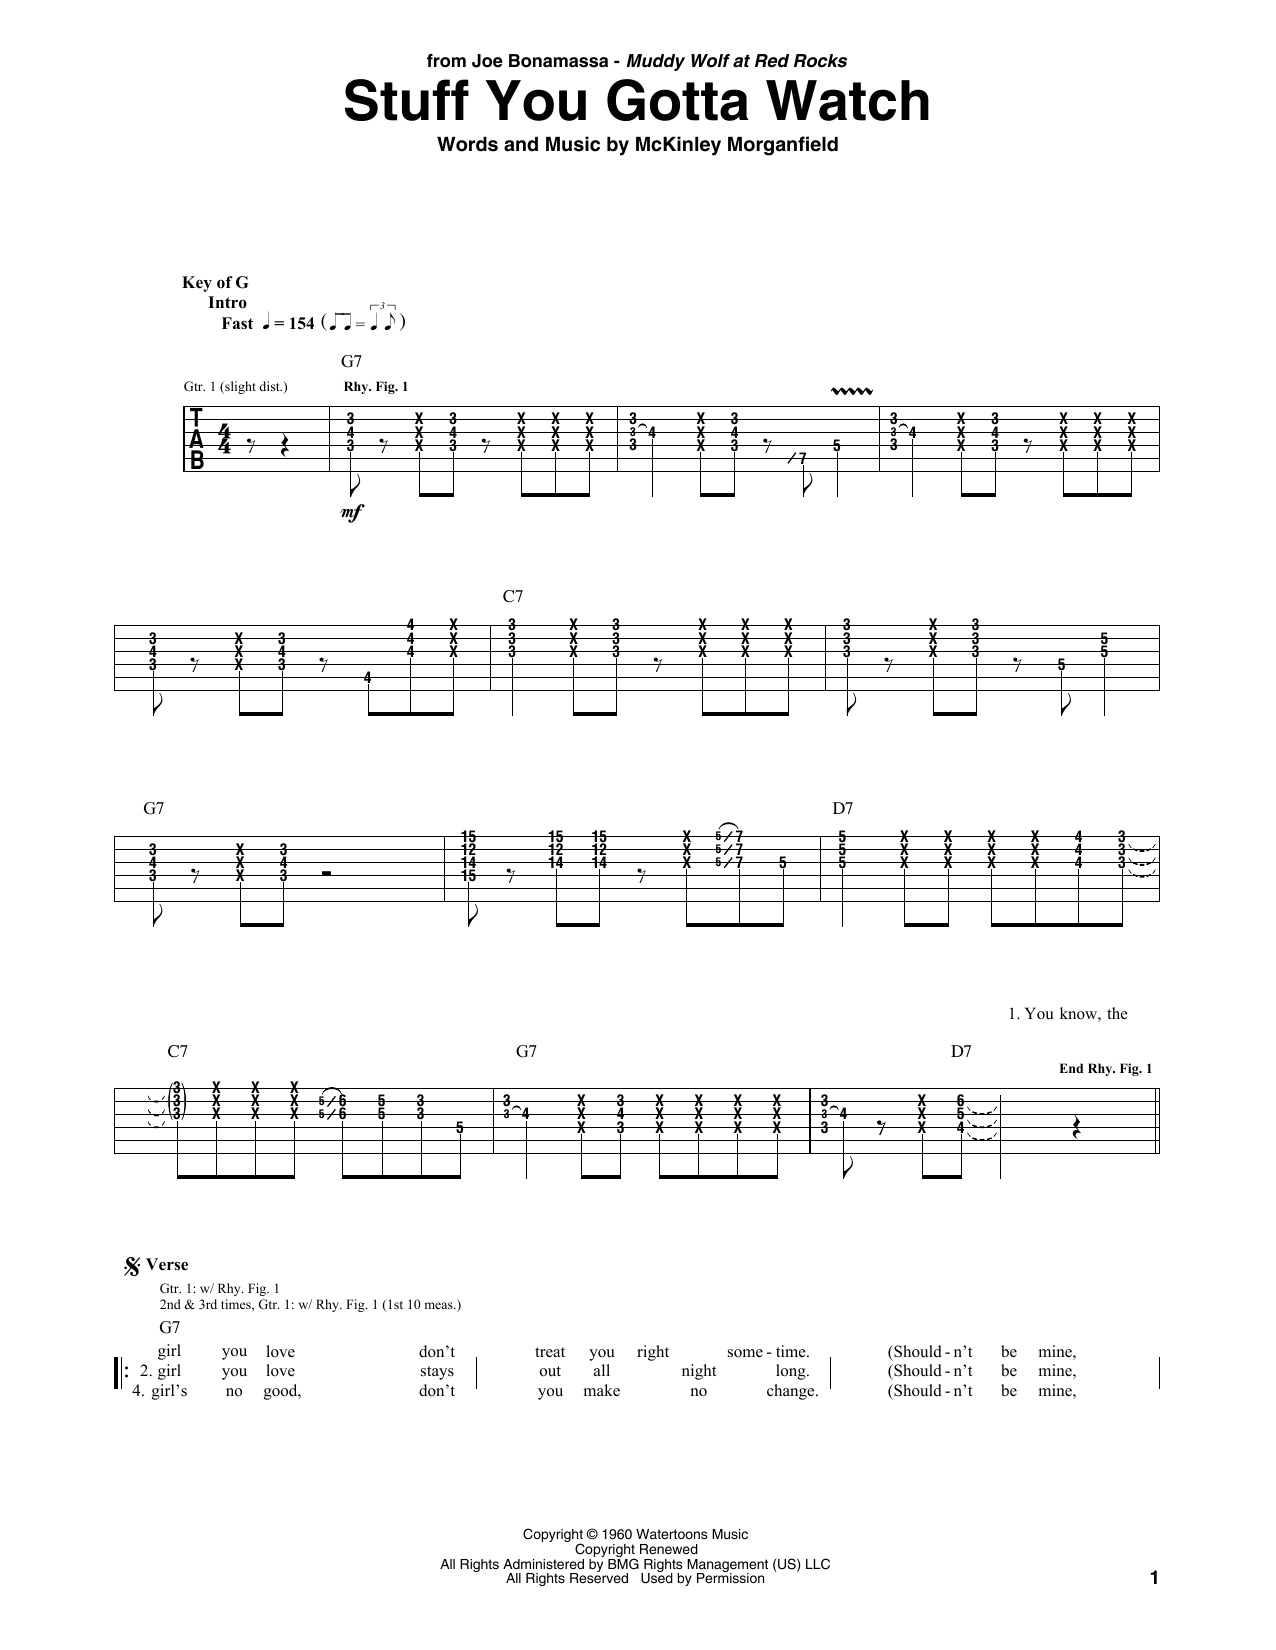 Joe Bonamassa Stuff You Gotta Watch Sheet Music Notes & Chords for Guitar Tab - Download or Print PDF